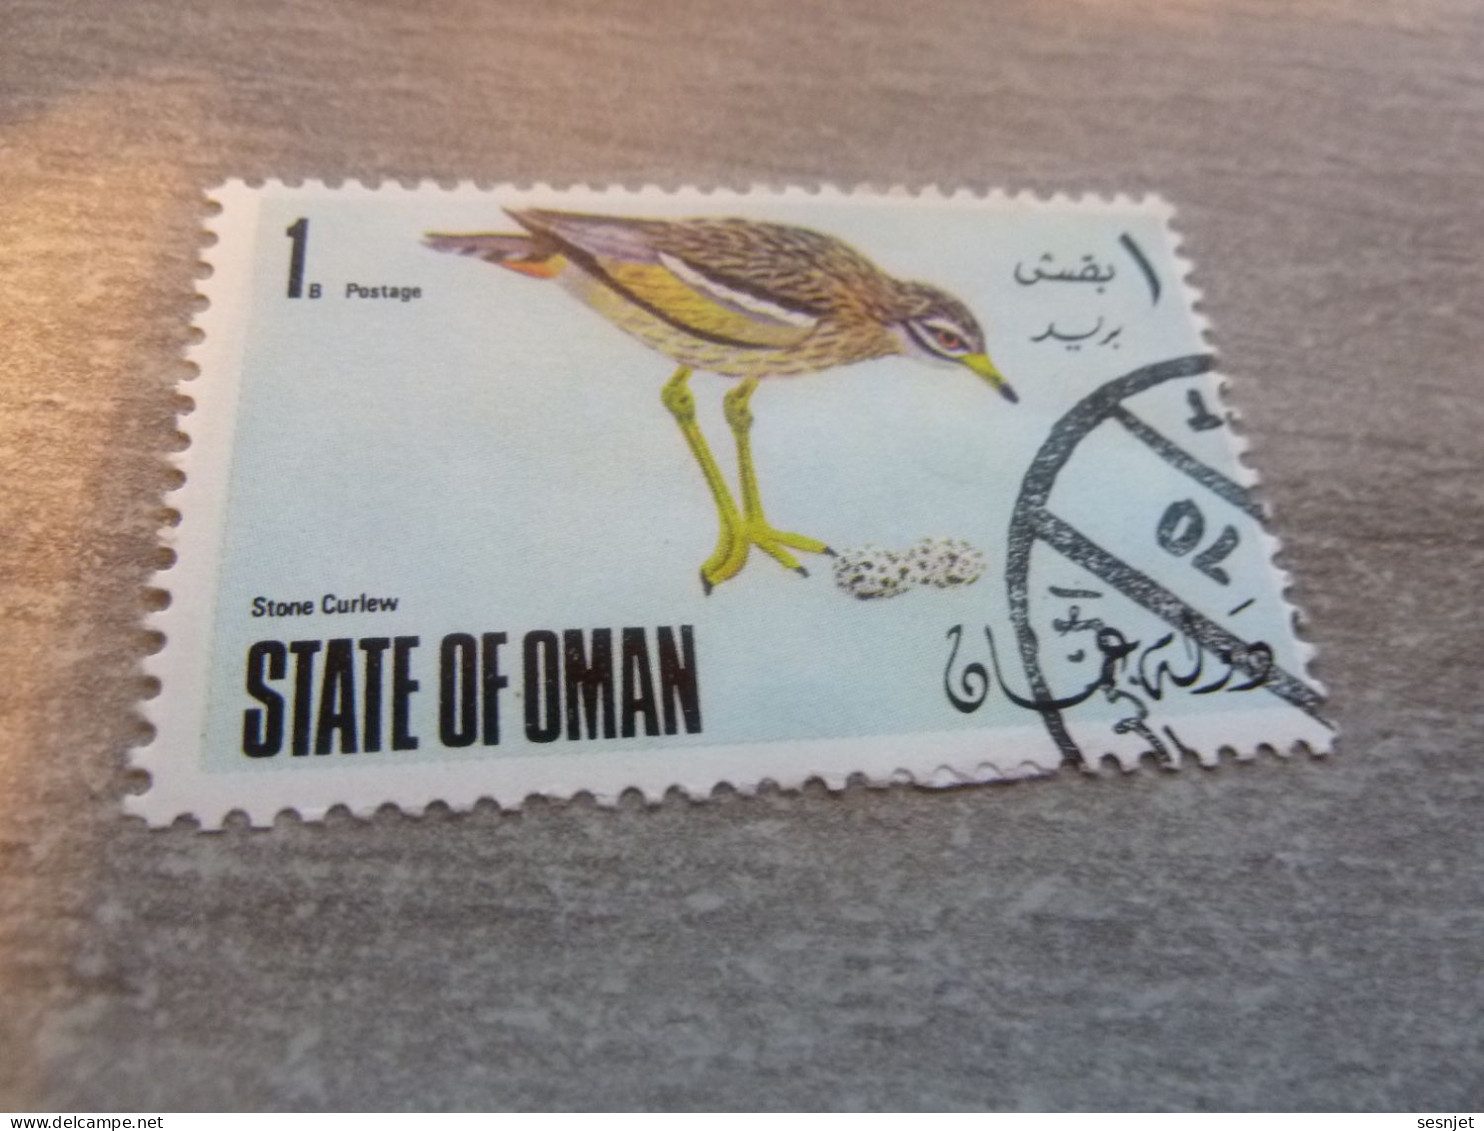 State Of Oman - Stone Curlew -  Val 1 B - Postage - Polychrome - Oblitéré - Année 1970 - - Cernícalo